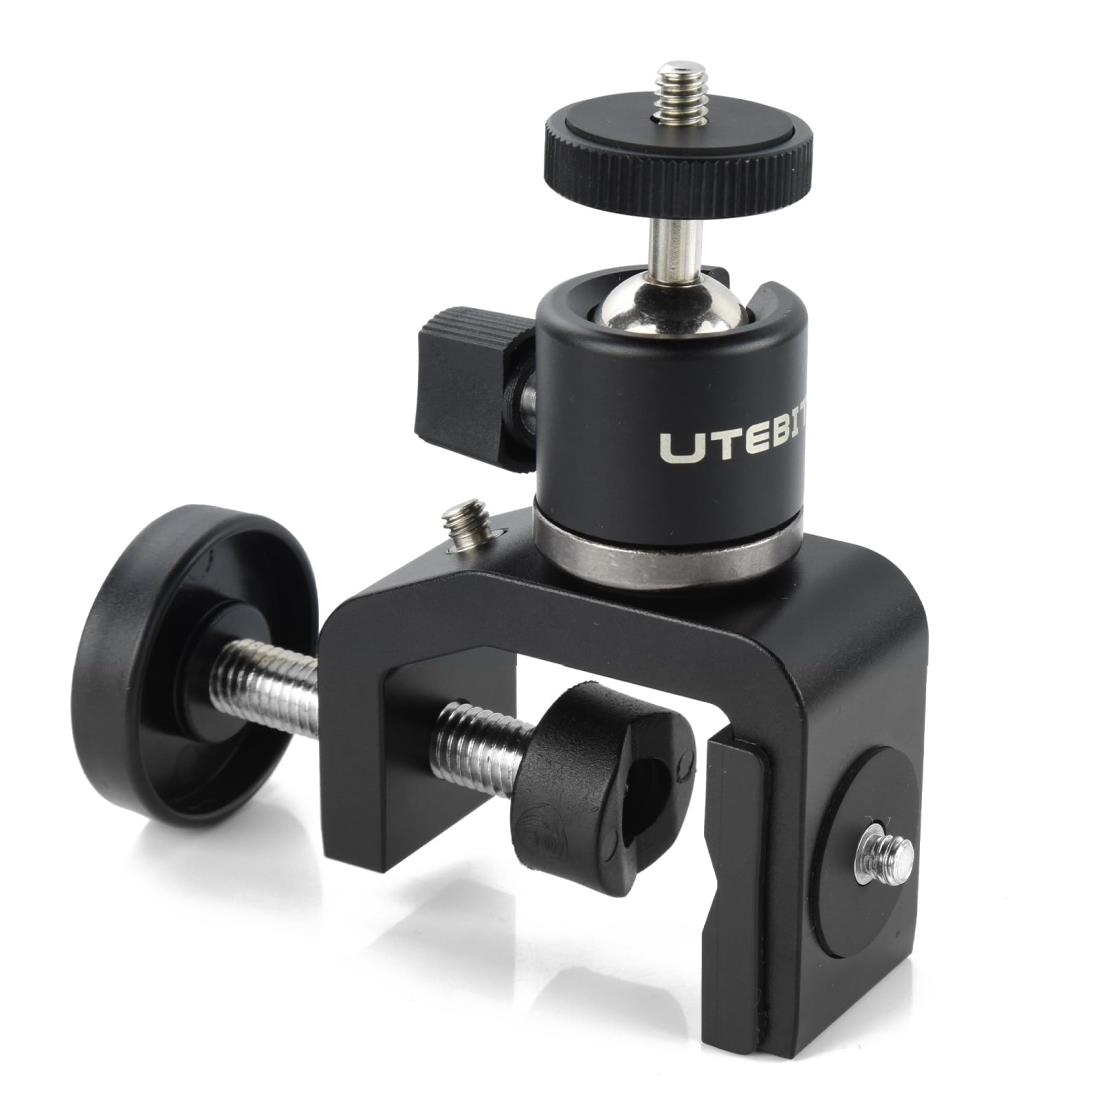 UTEBIT カメラ クランプ 雲台 小型 1/4ネジ 耐荷重2kg C型クランプ カメラスタンド クランプ 強化アルミ製 三脚 ボールヘッド シュー付き カメラ固定クランプ 幅30mmまでのホルダーに設置可能 …